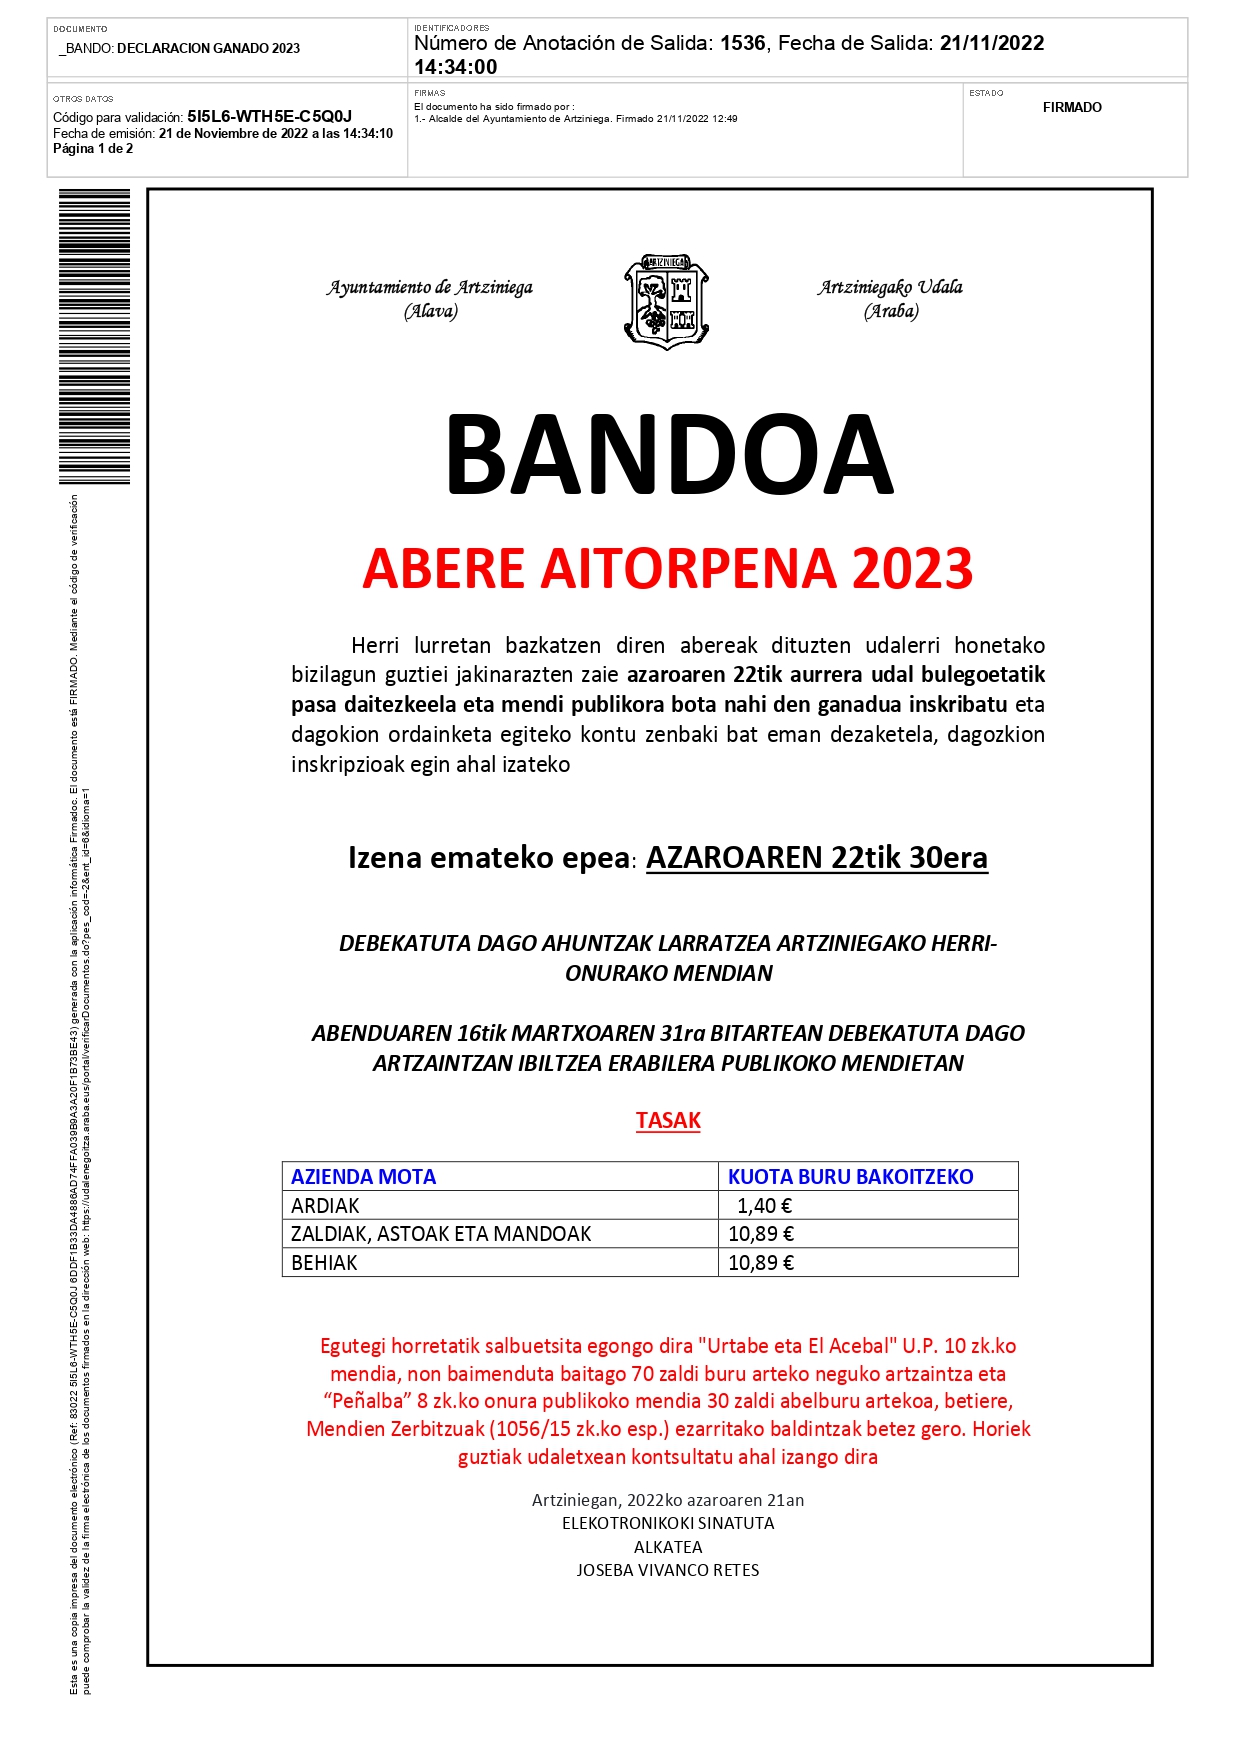 BANDOA: ABERE AITORPENA 2023